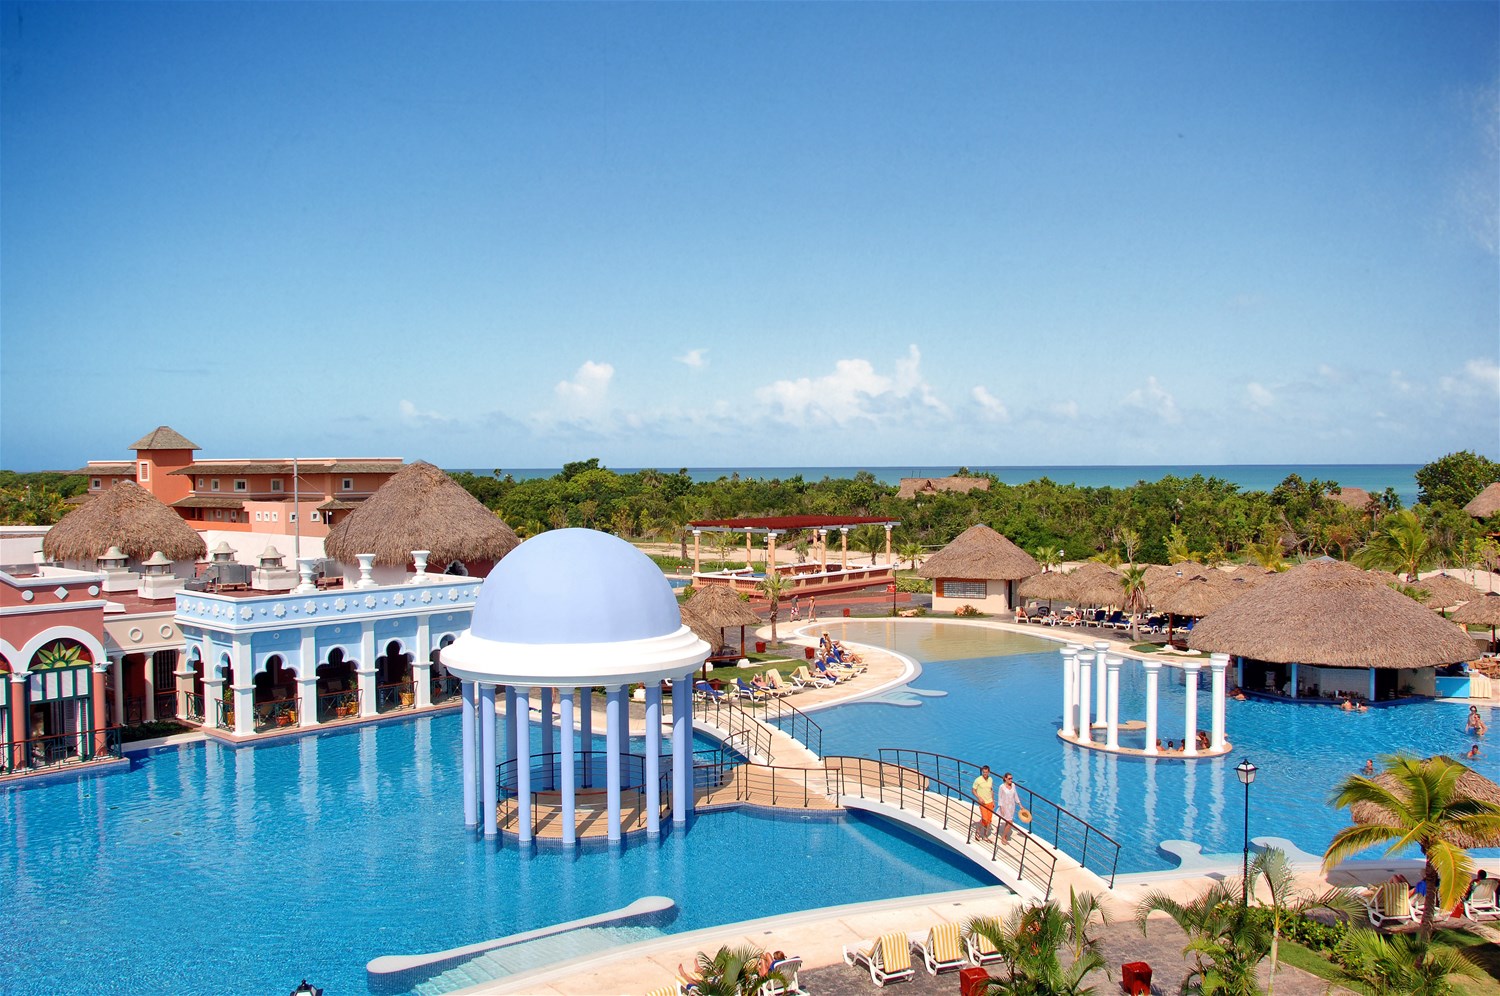 Los 10 mejores hoteles de Cuba según TripAdvisor